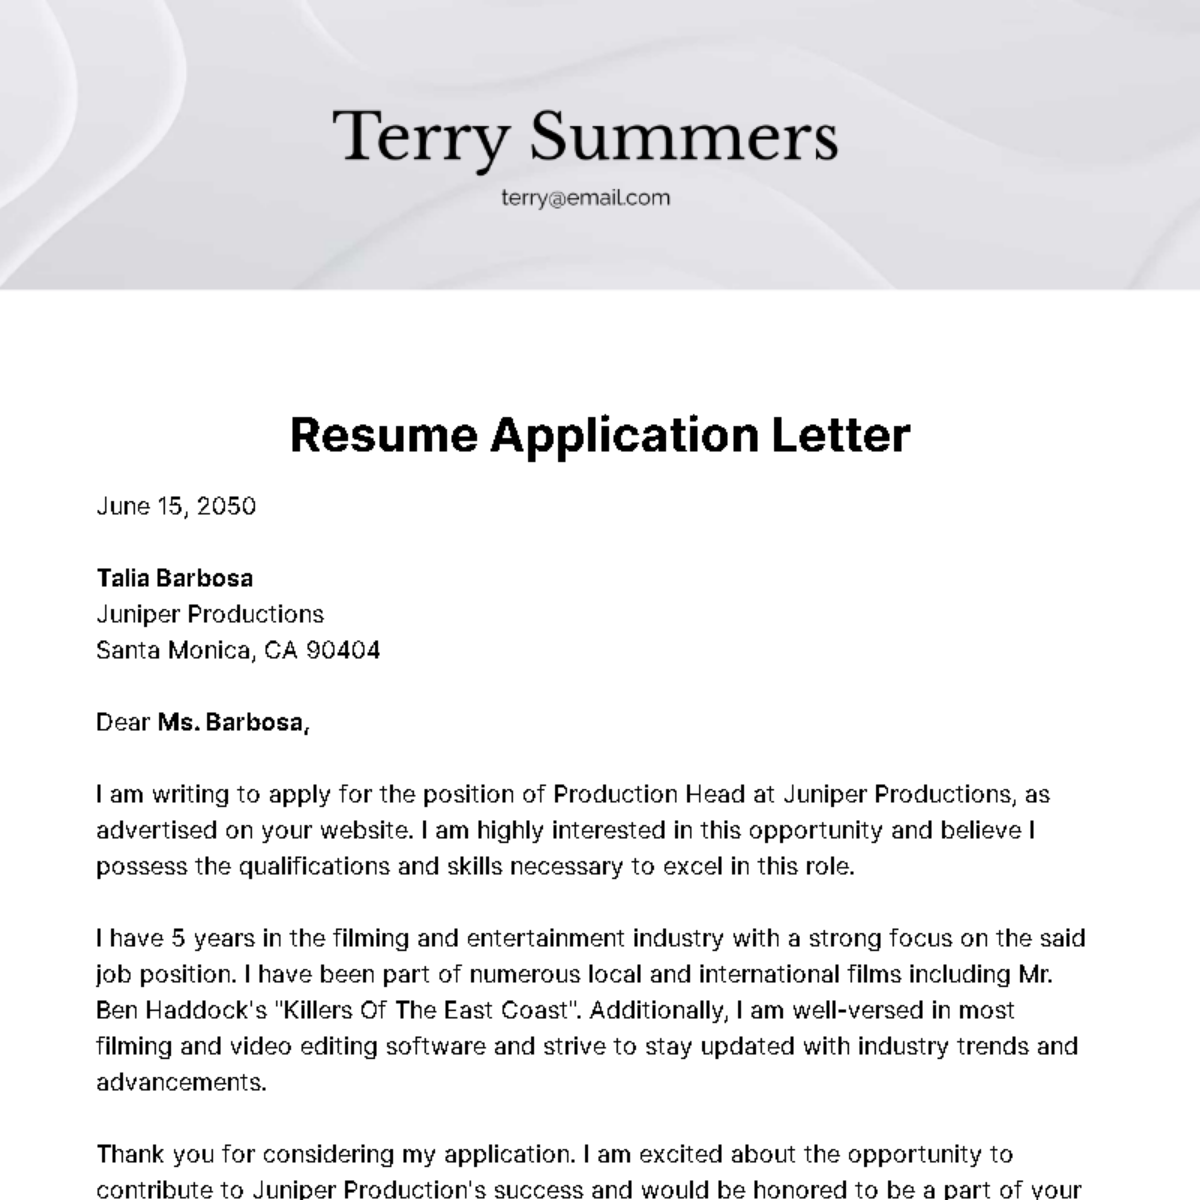 Resume Application Letter Template